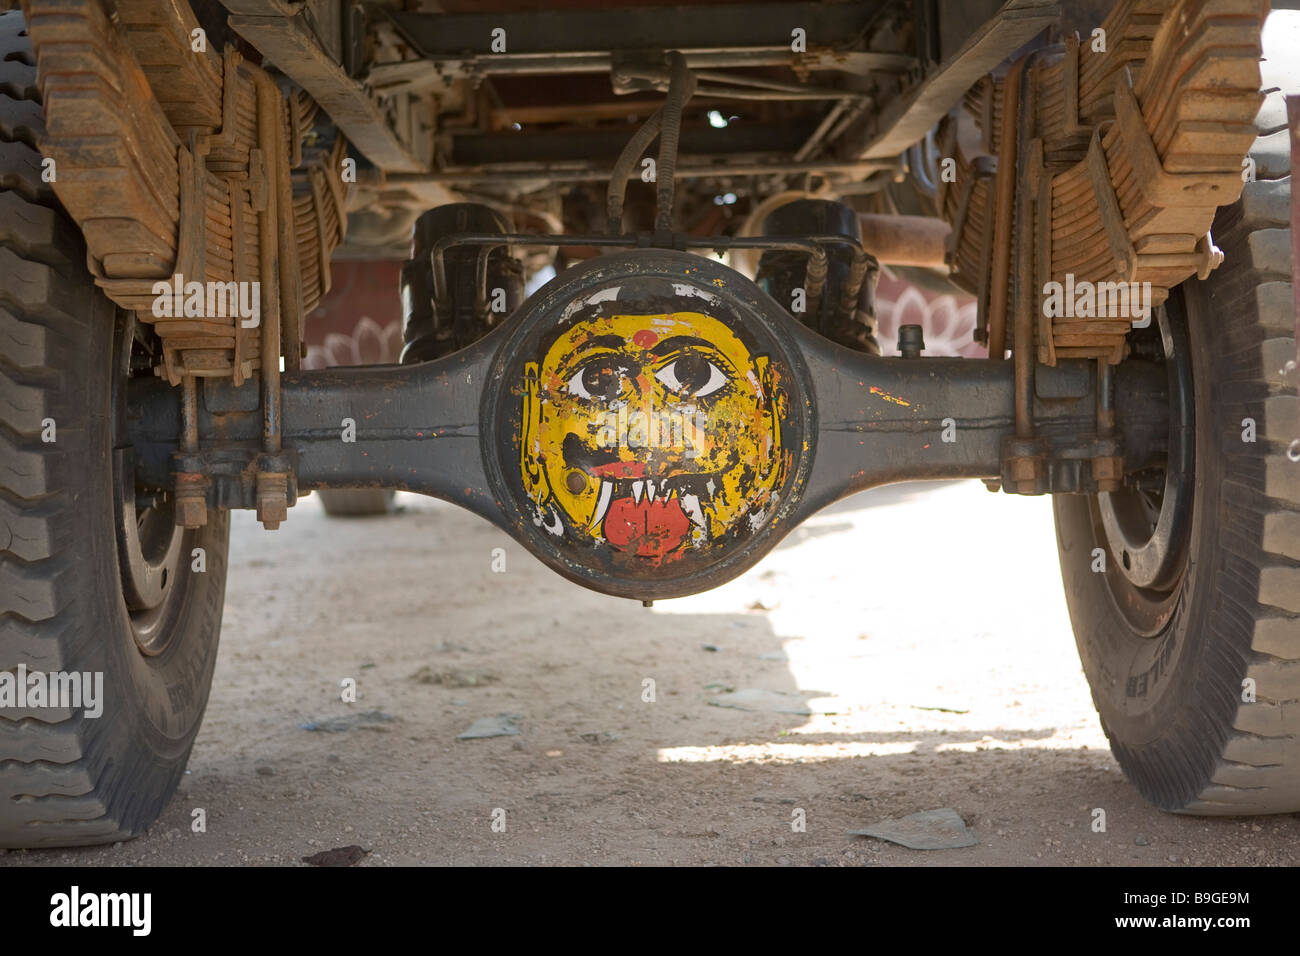 India Hyderabad decorata carrello Foto Stock